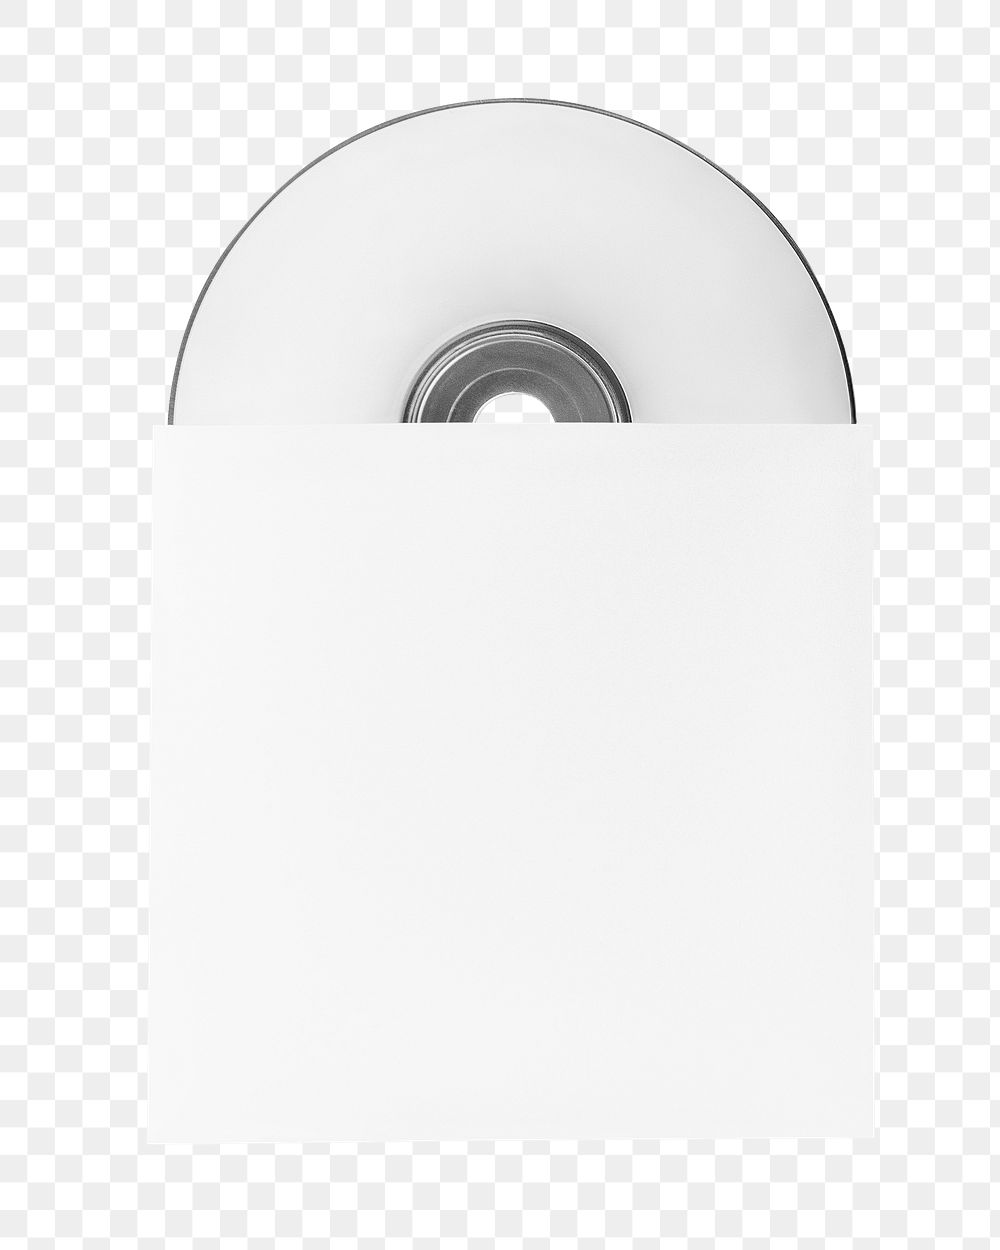 CD album cover png, transparent design